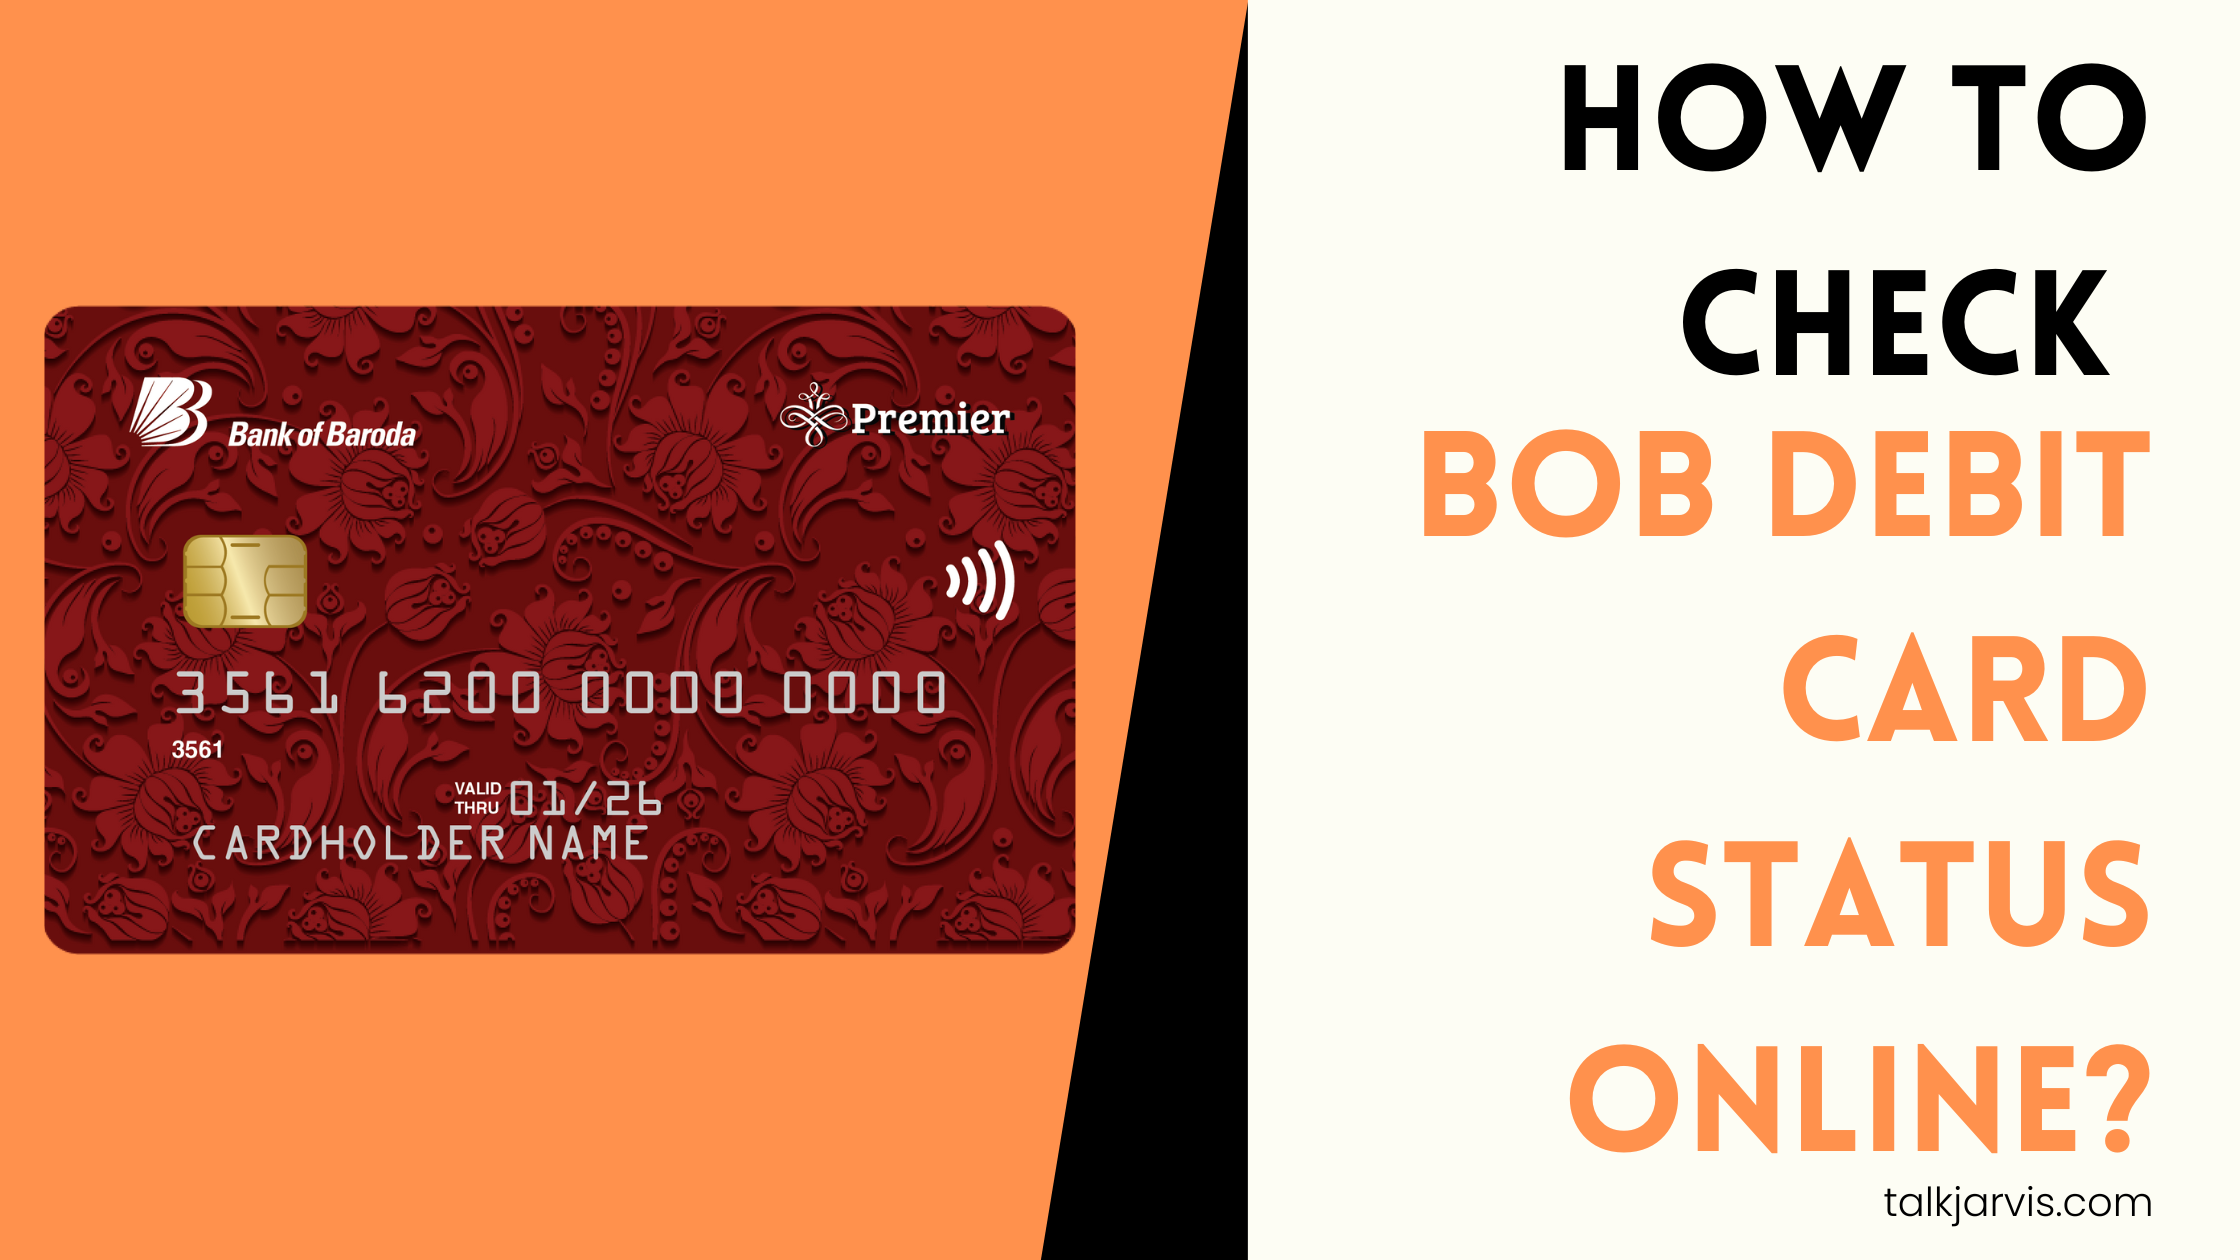 How to Check BOB Debit Card Status Online